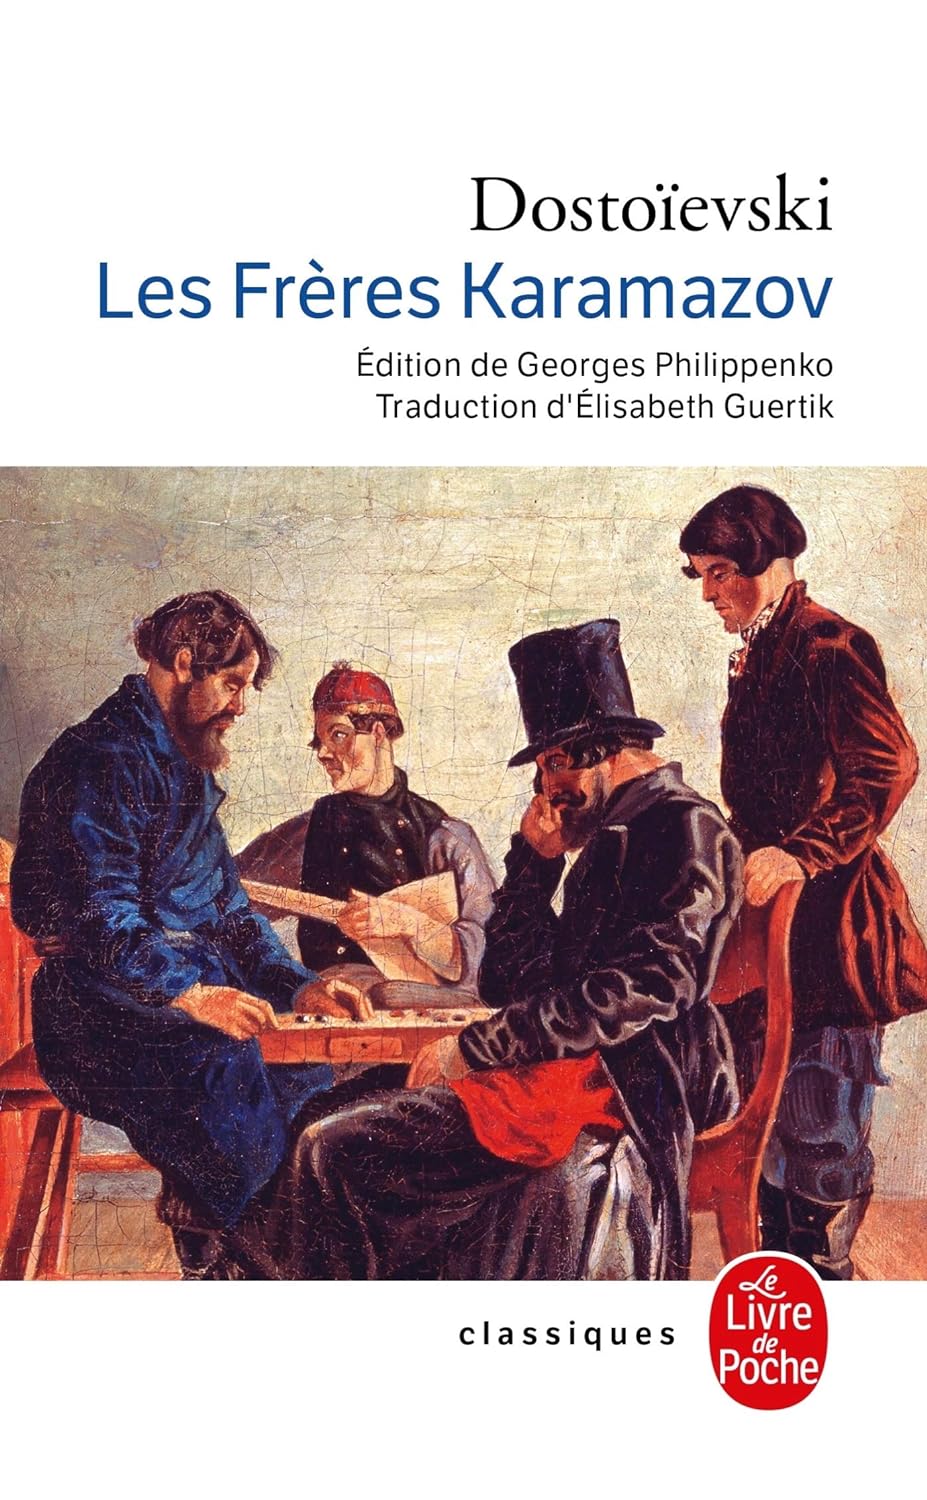 Les frères Karamazov (French language, 1994)